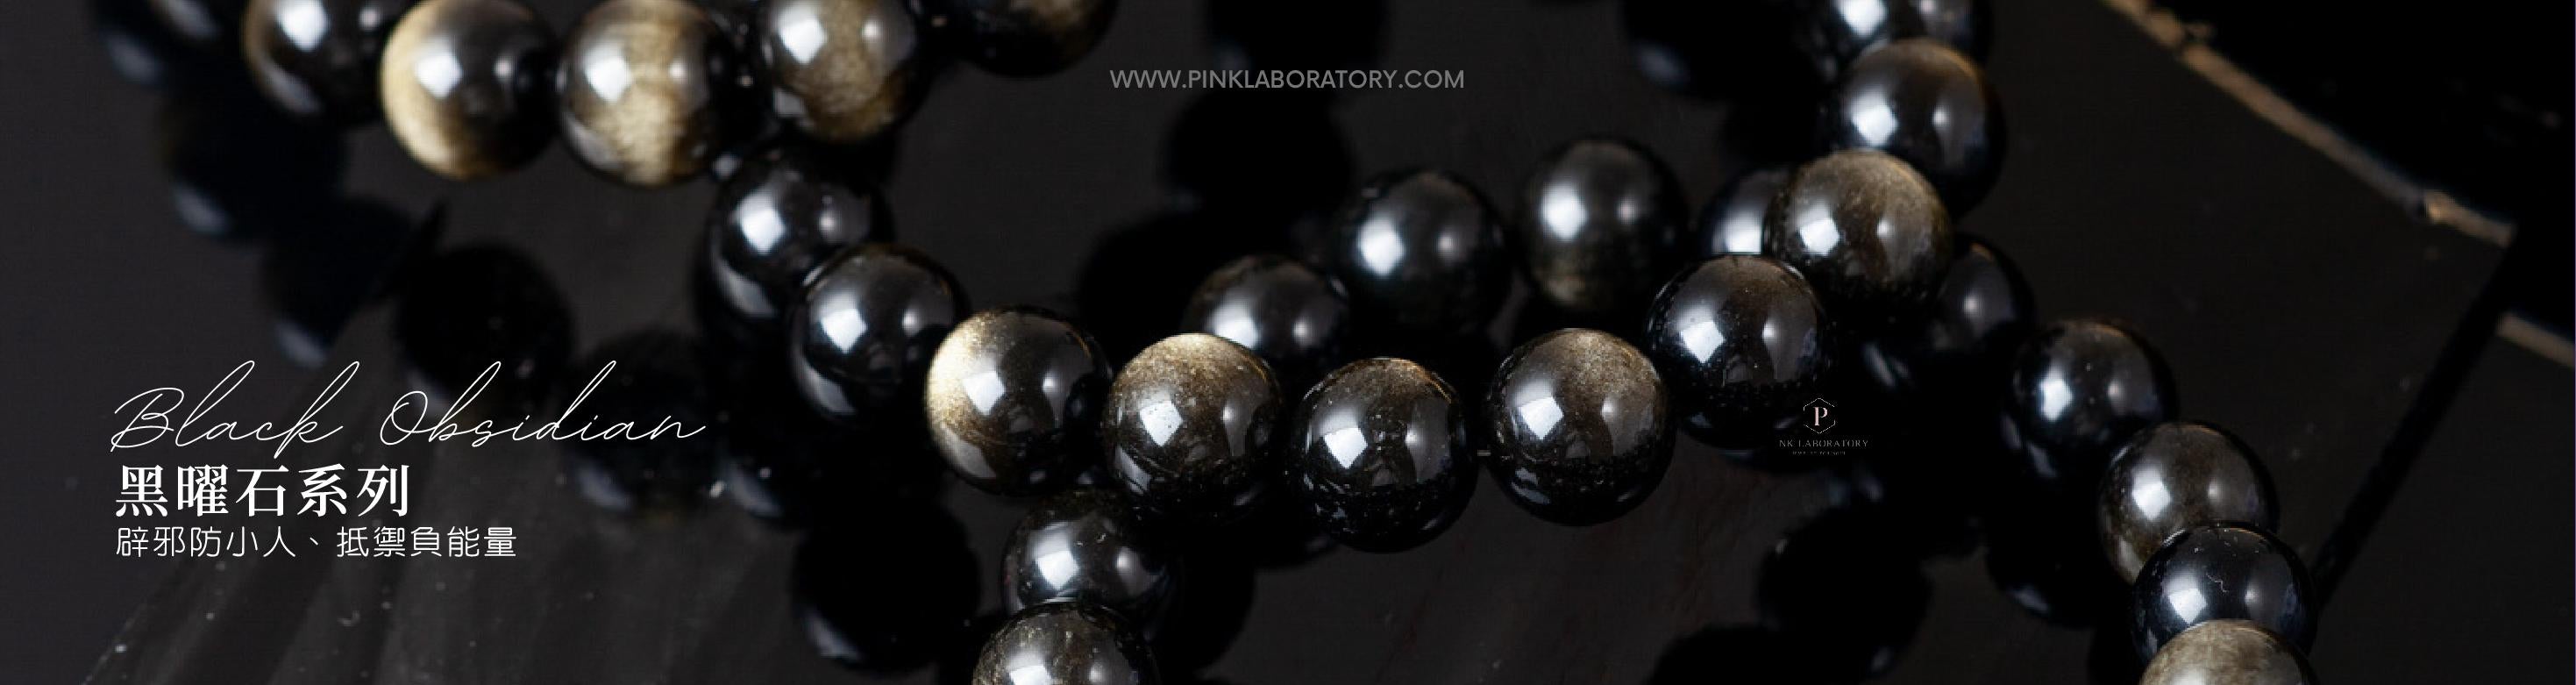 黑曜石Black Obsidian | Pink Laboratory